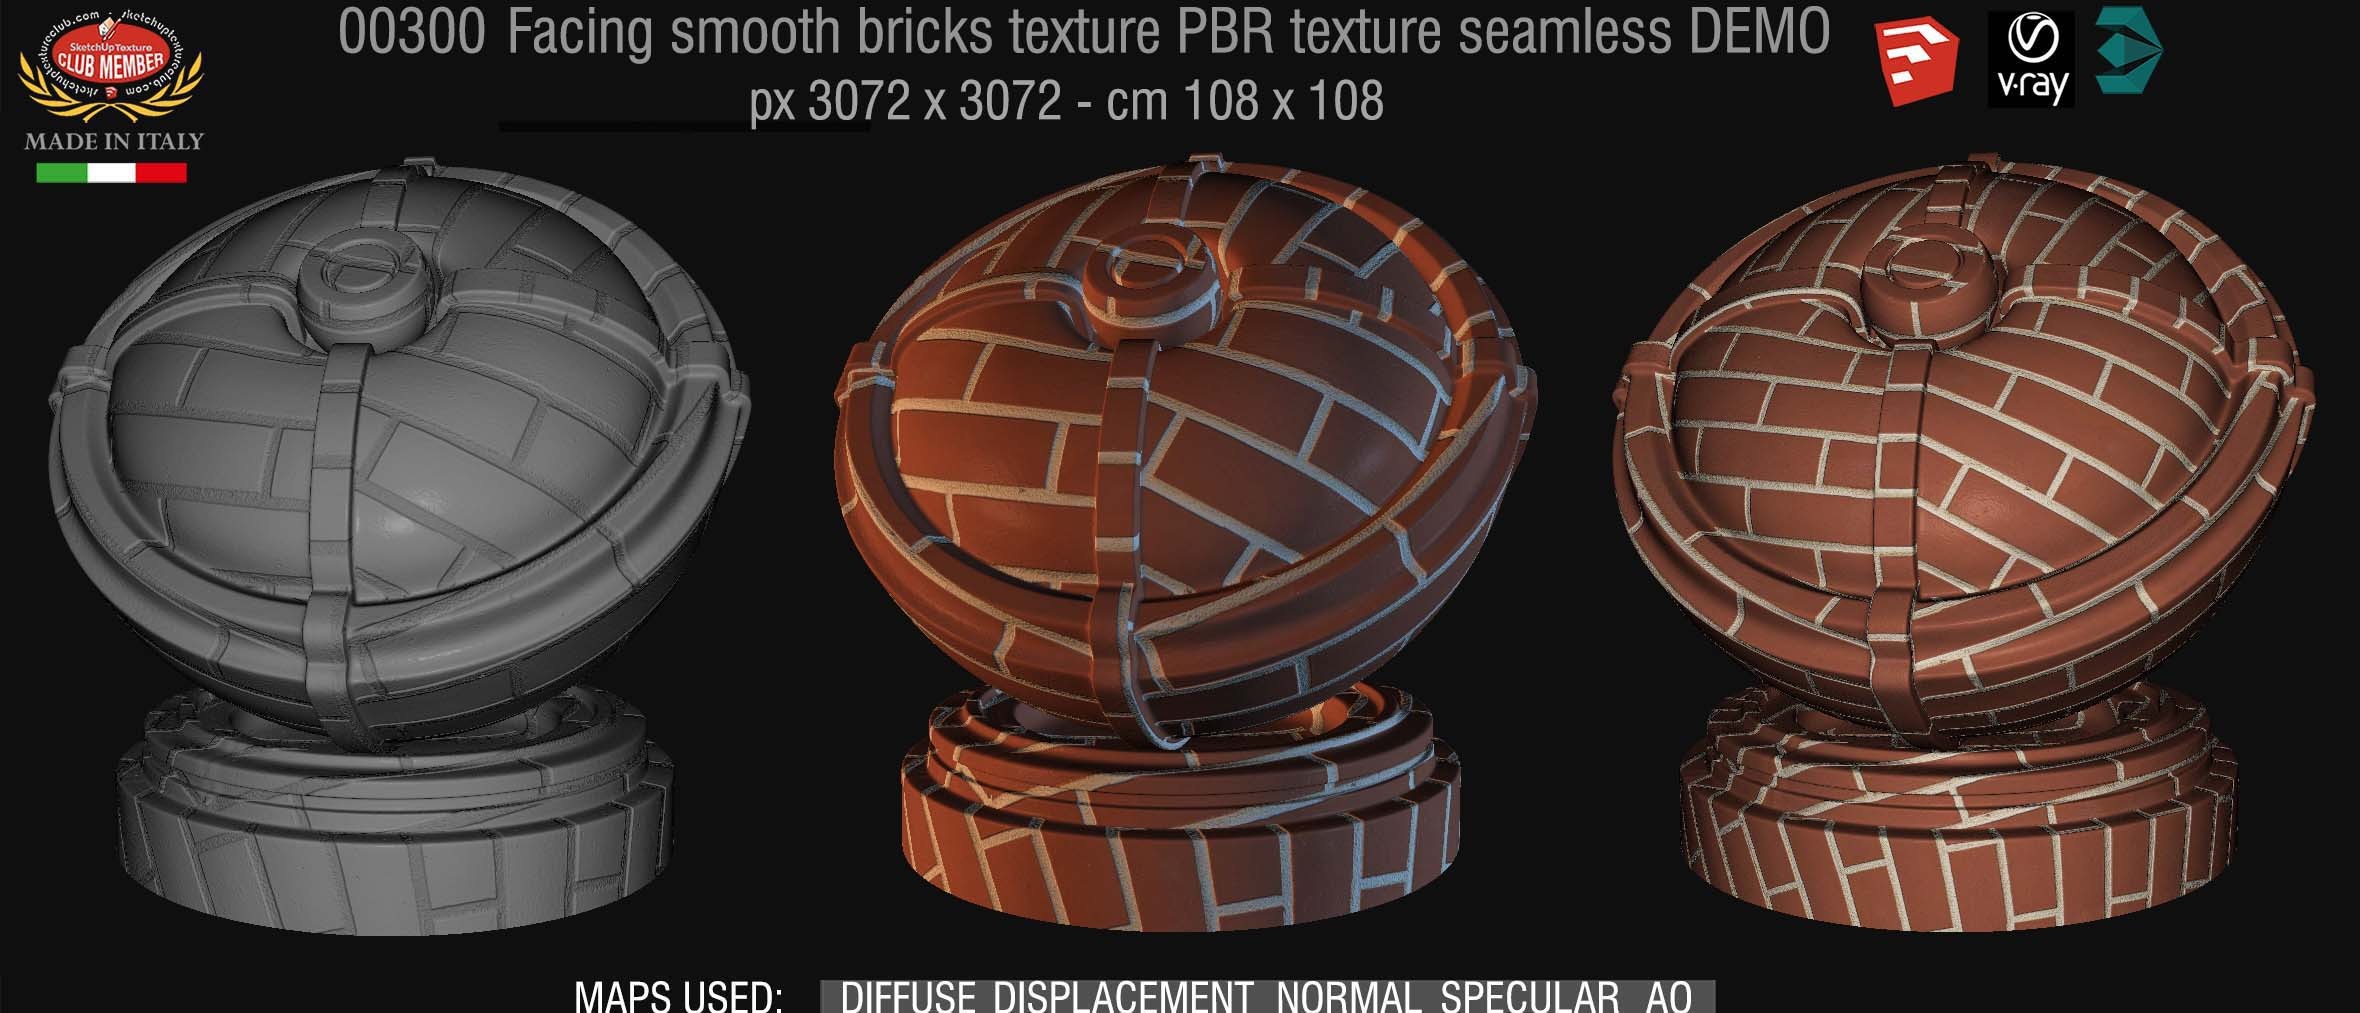 00300 Facing smooth bricks PBR texture seamless DEMO